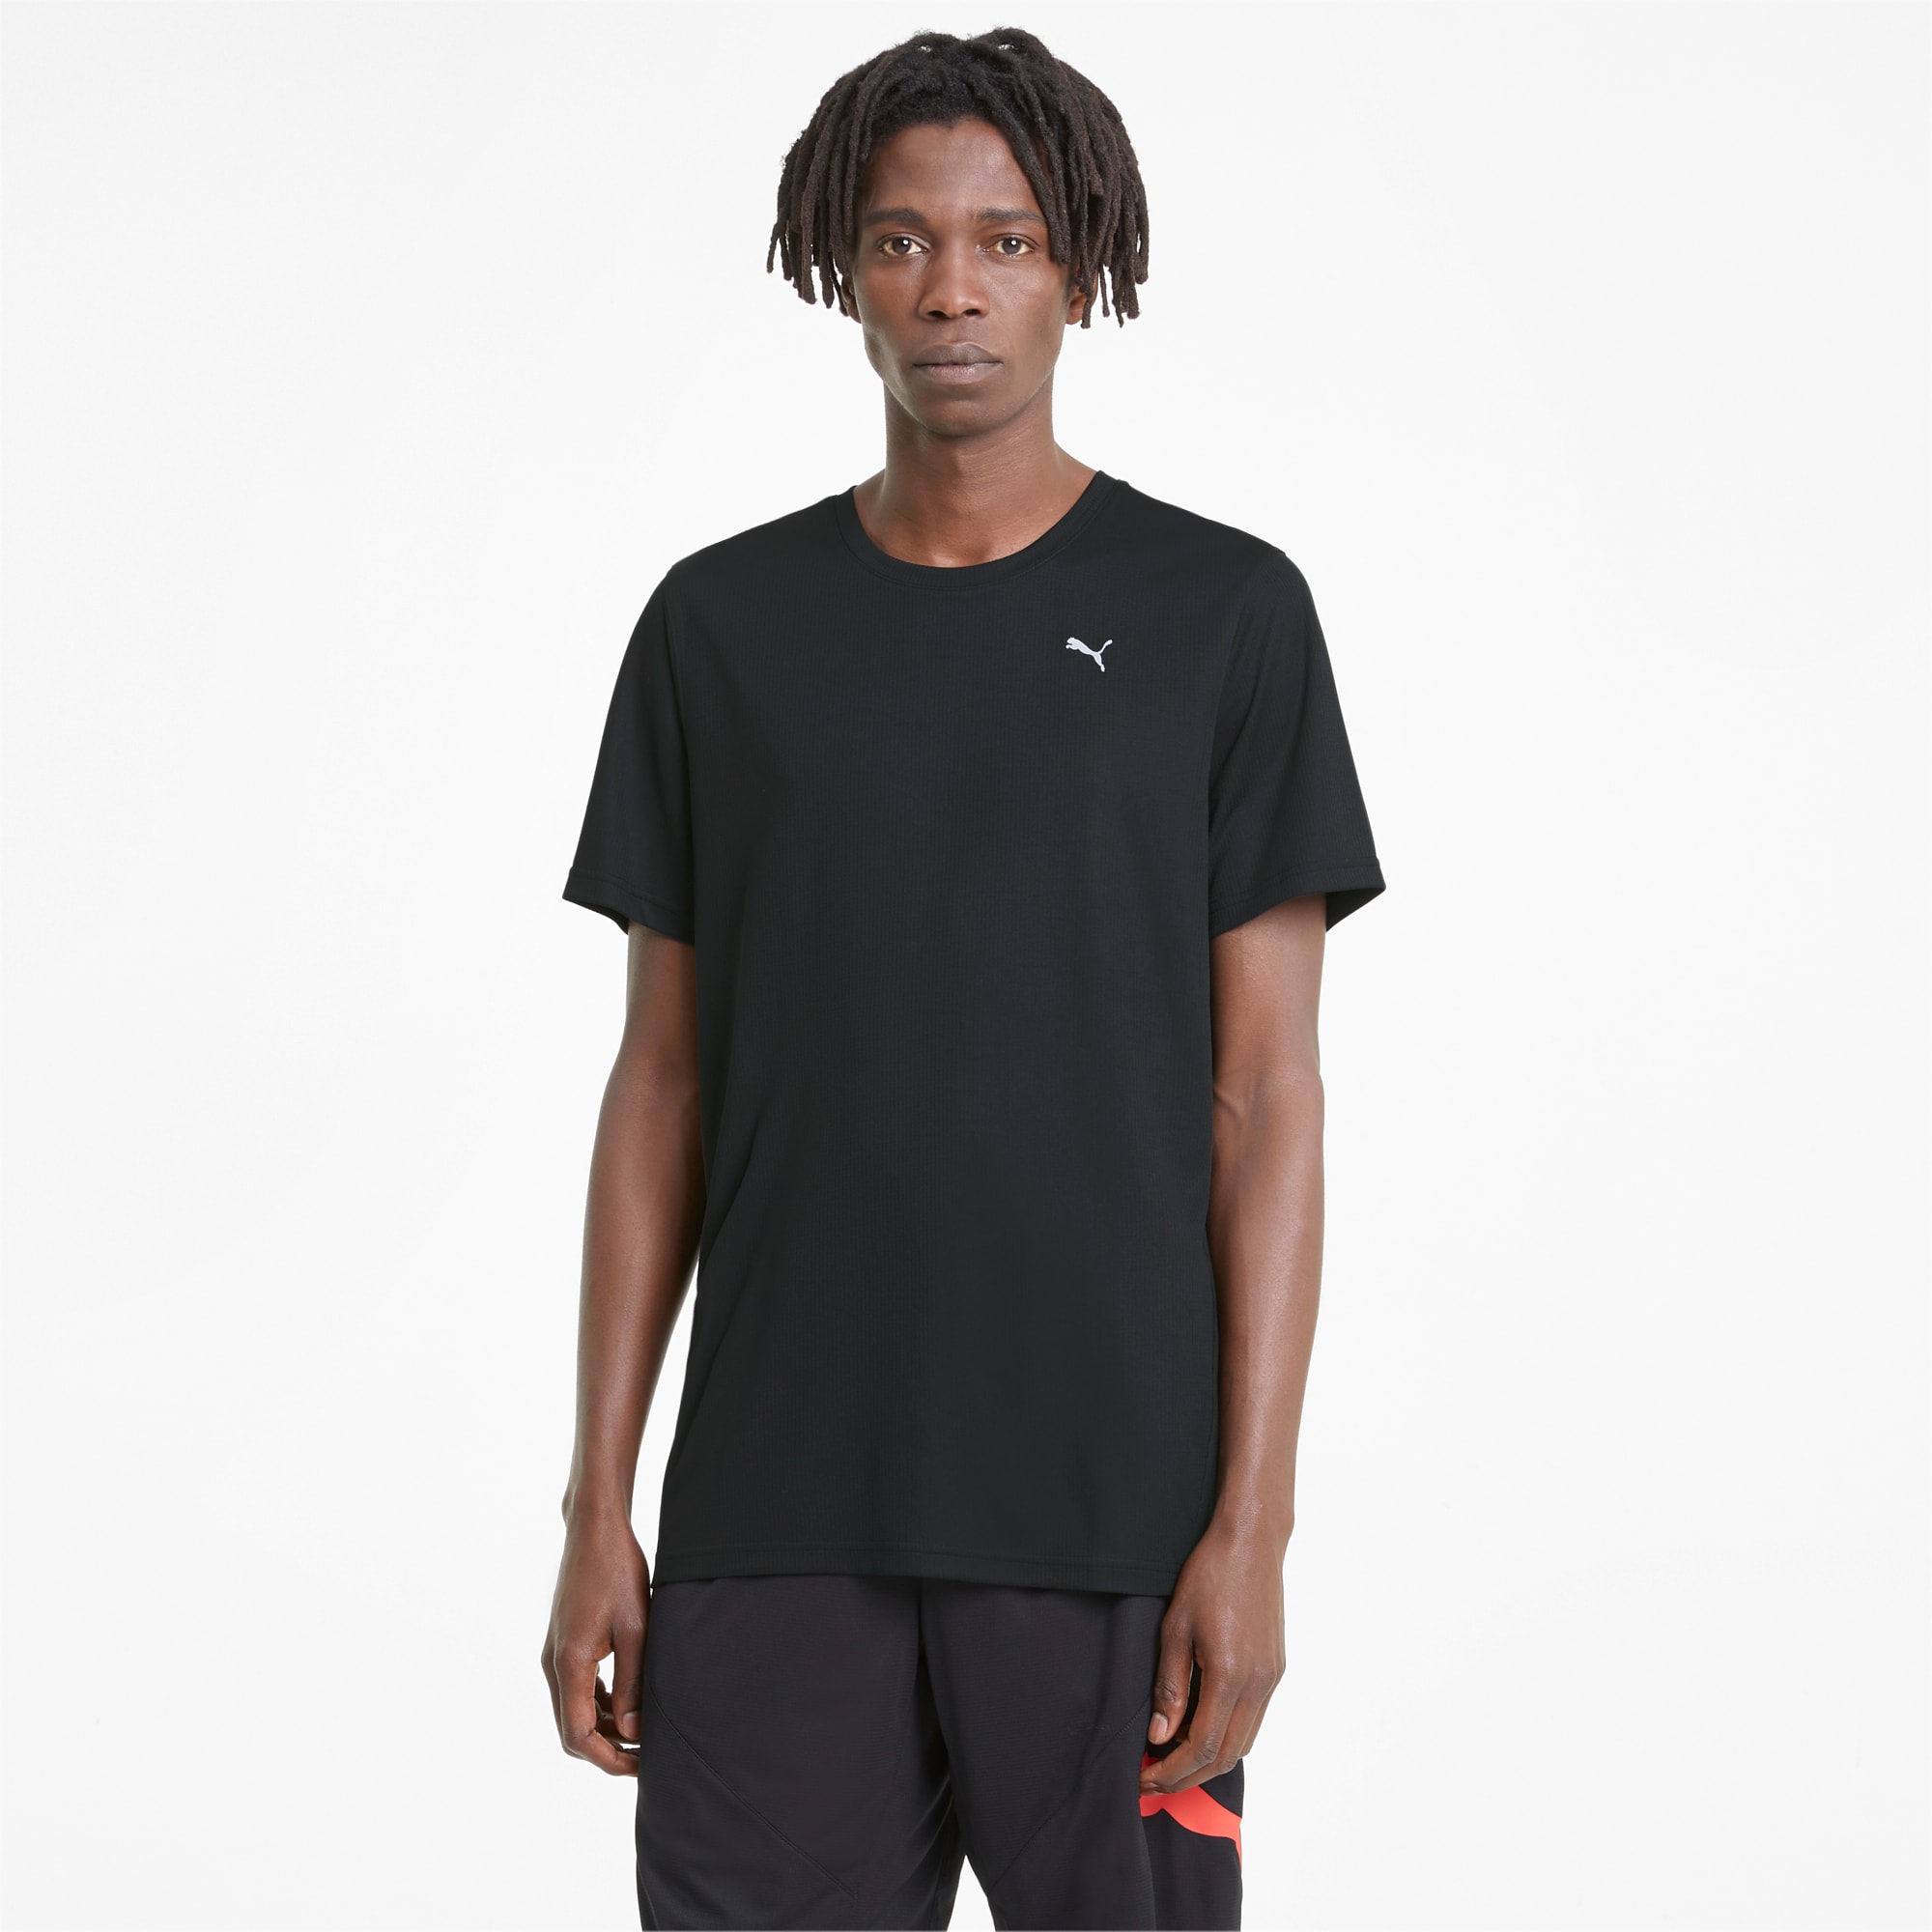 PUMA Performance Short Sleeve Men's Training T-Shirt, Black, Size XS, Clothing